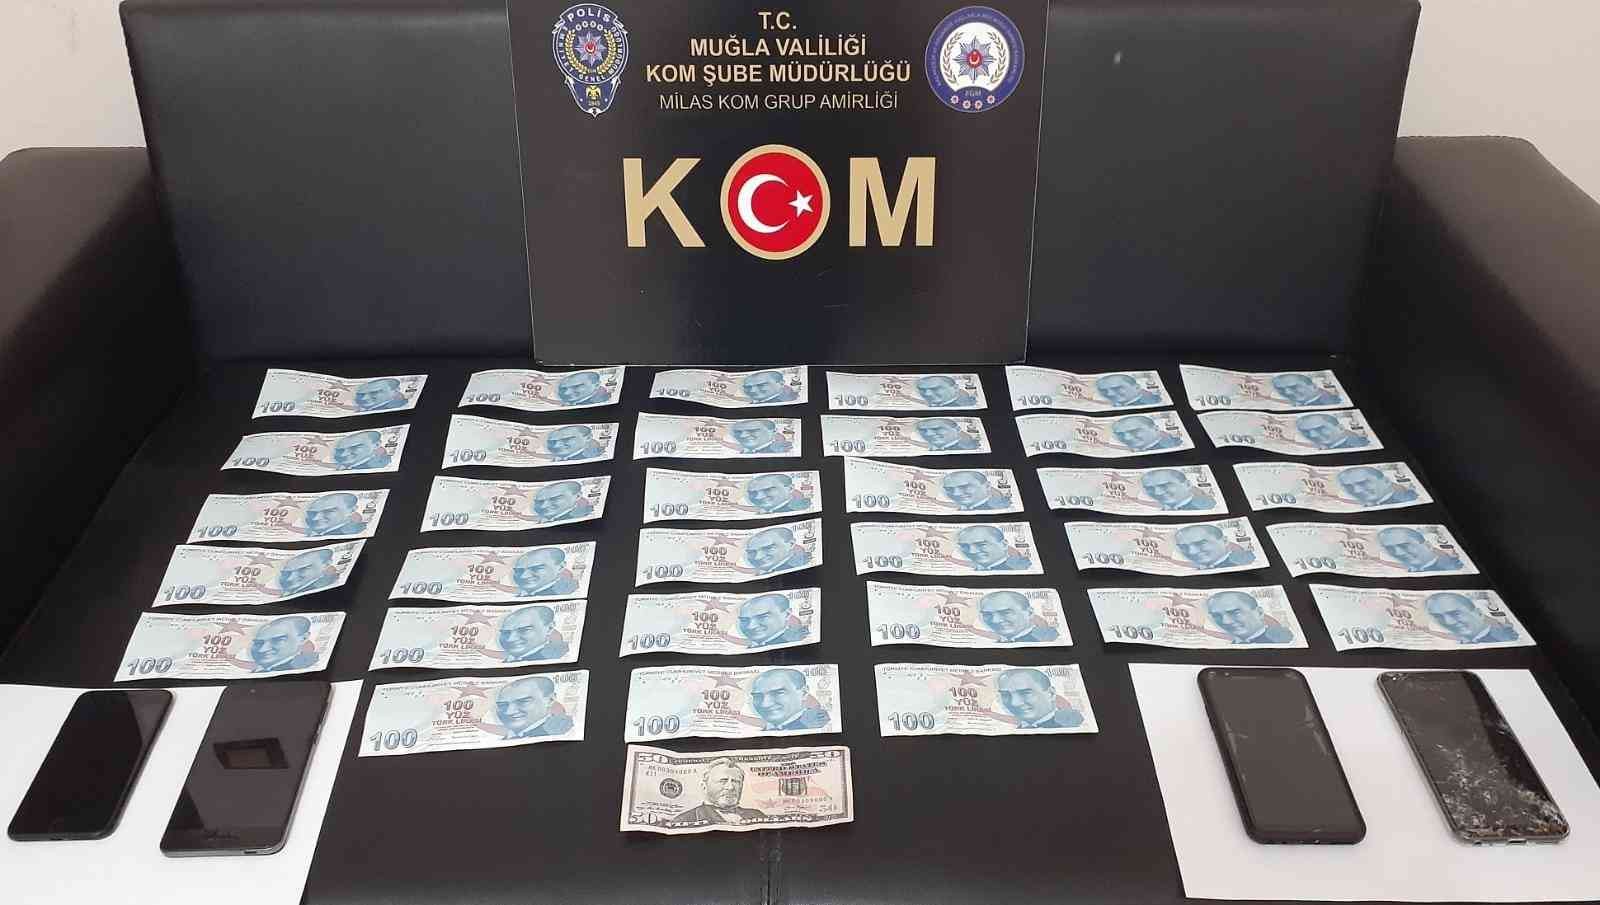 Milas’ta sahte para ele geçirildi, 4 kişi gözaltına alındı #mugla